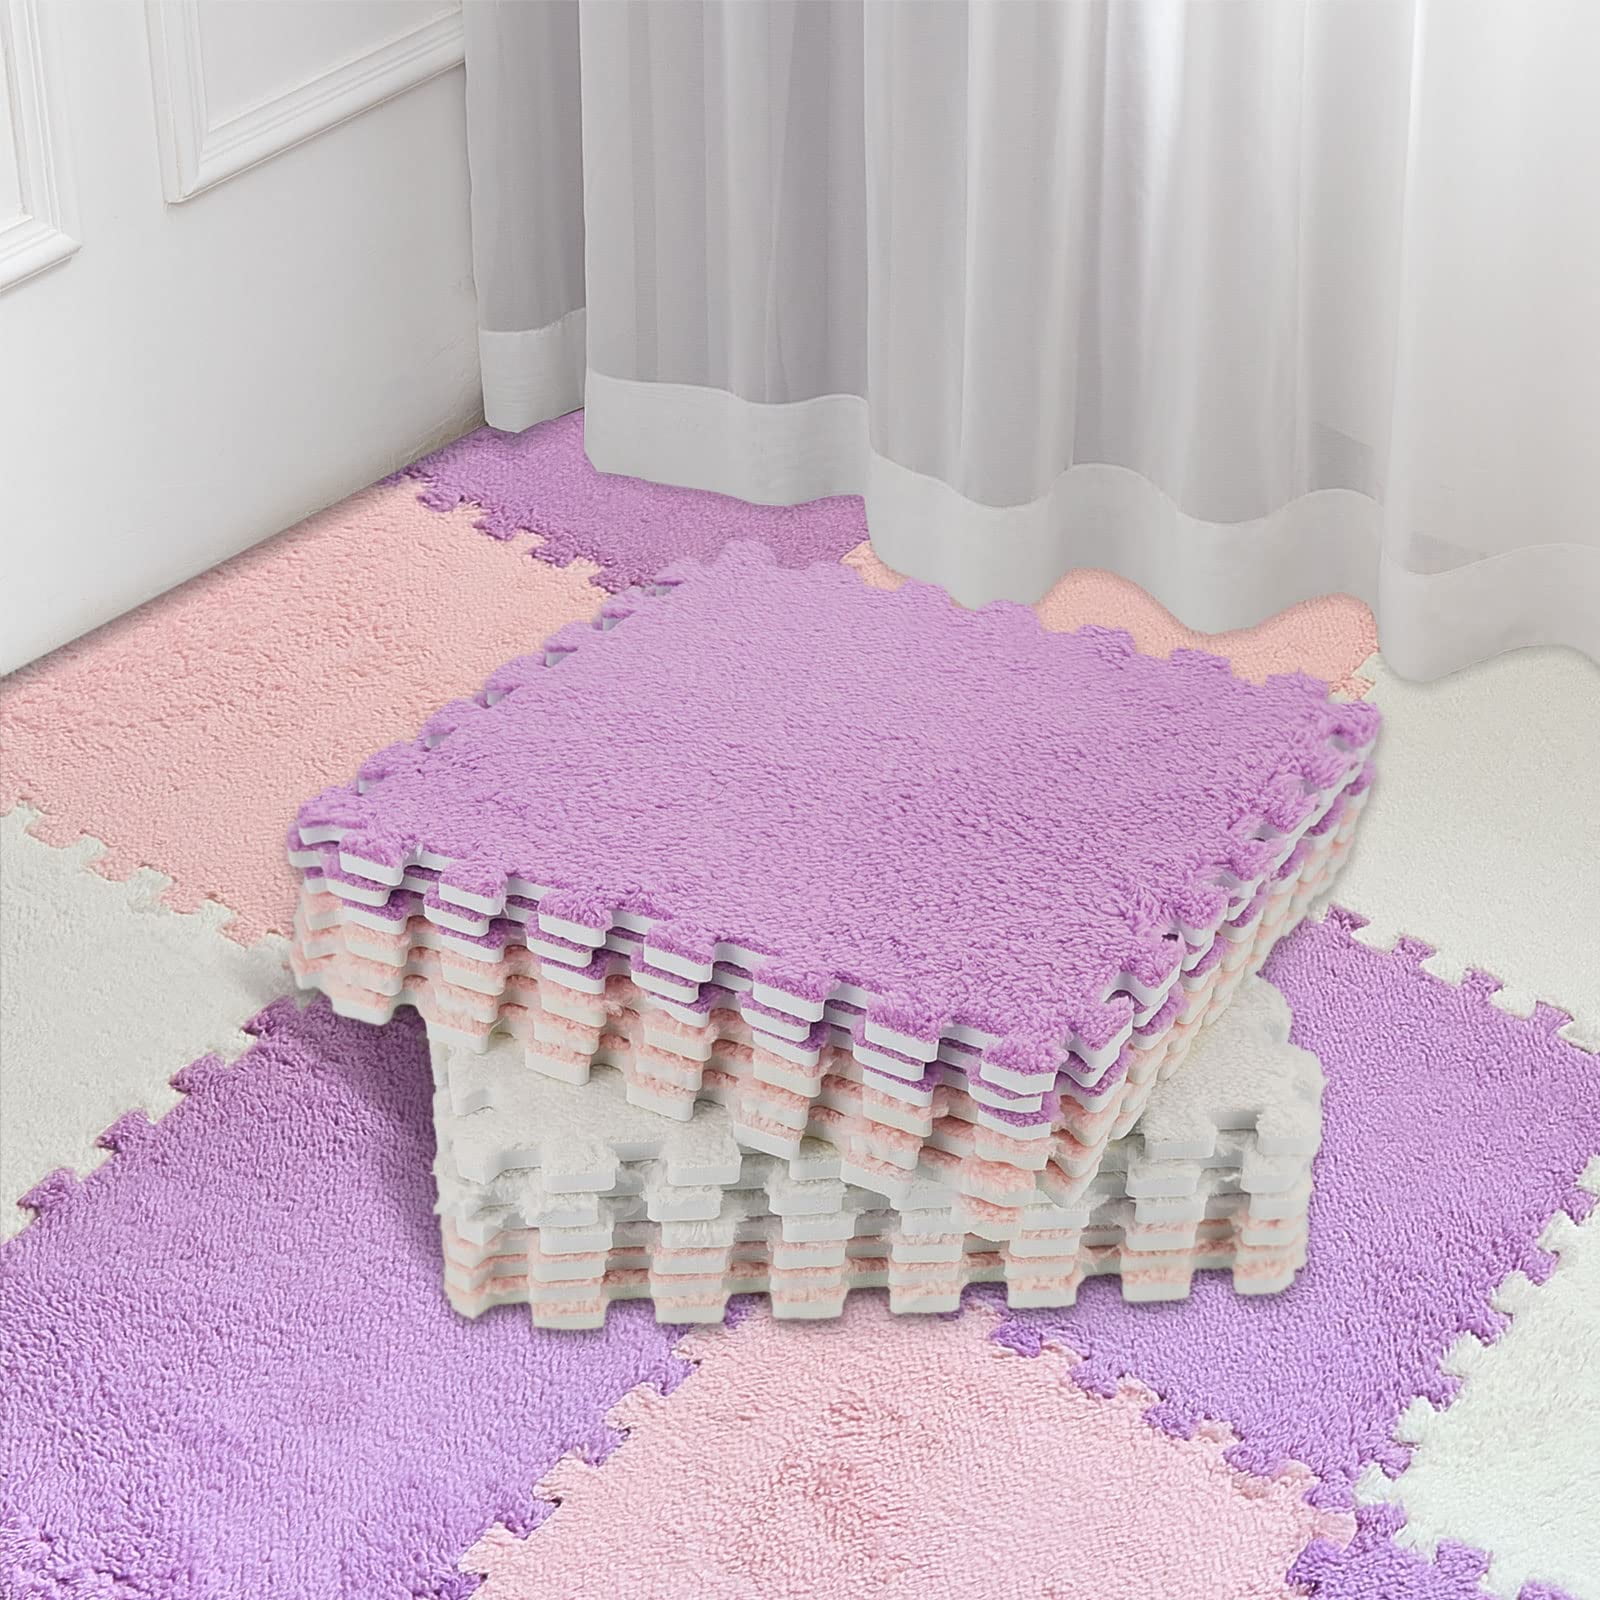 16 Pcs Foam Floor Mat Square Interlocking Carpet Tiles Play Mat Soft Climbing Area Rugs, 12 x 12 x 0.4 inch Green